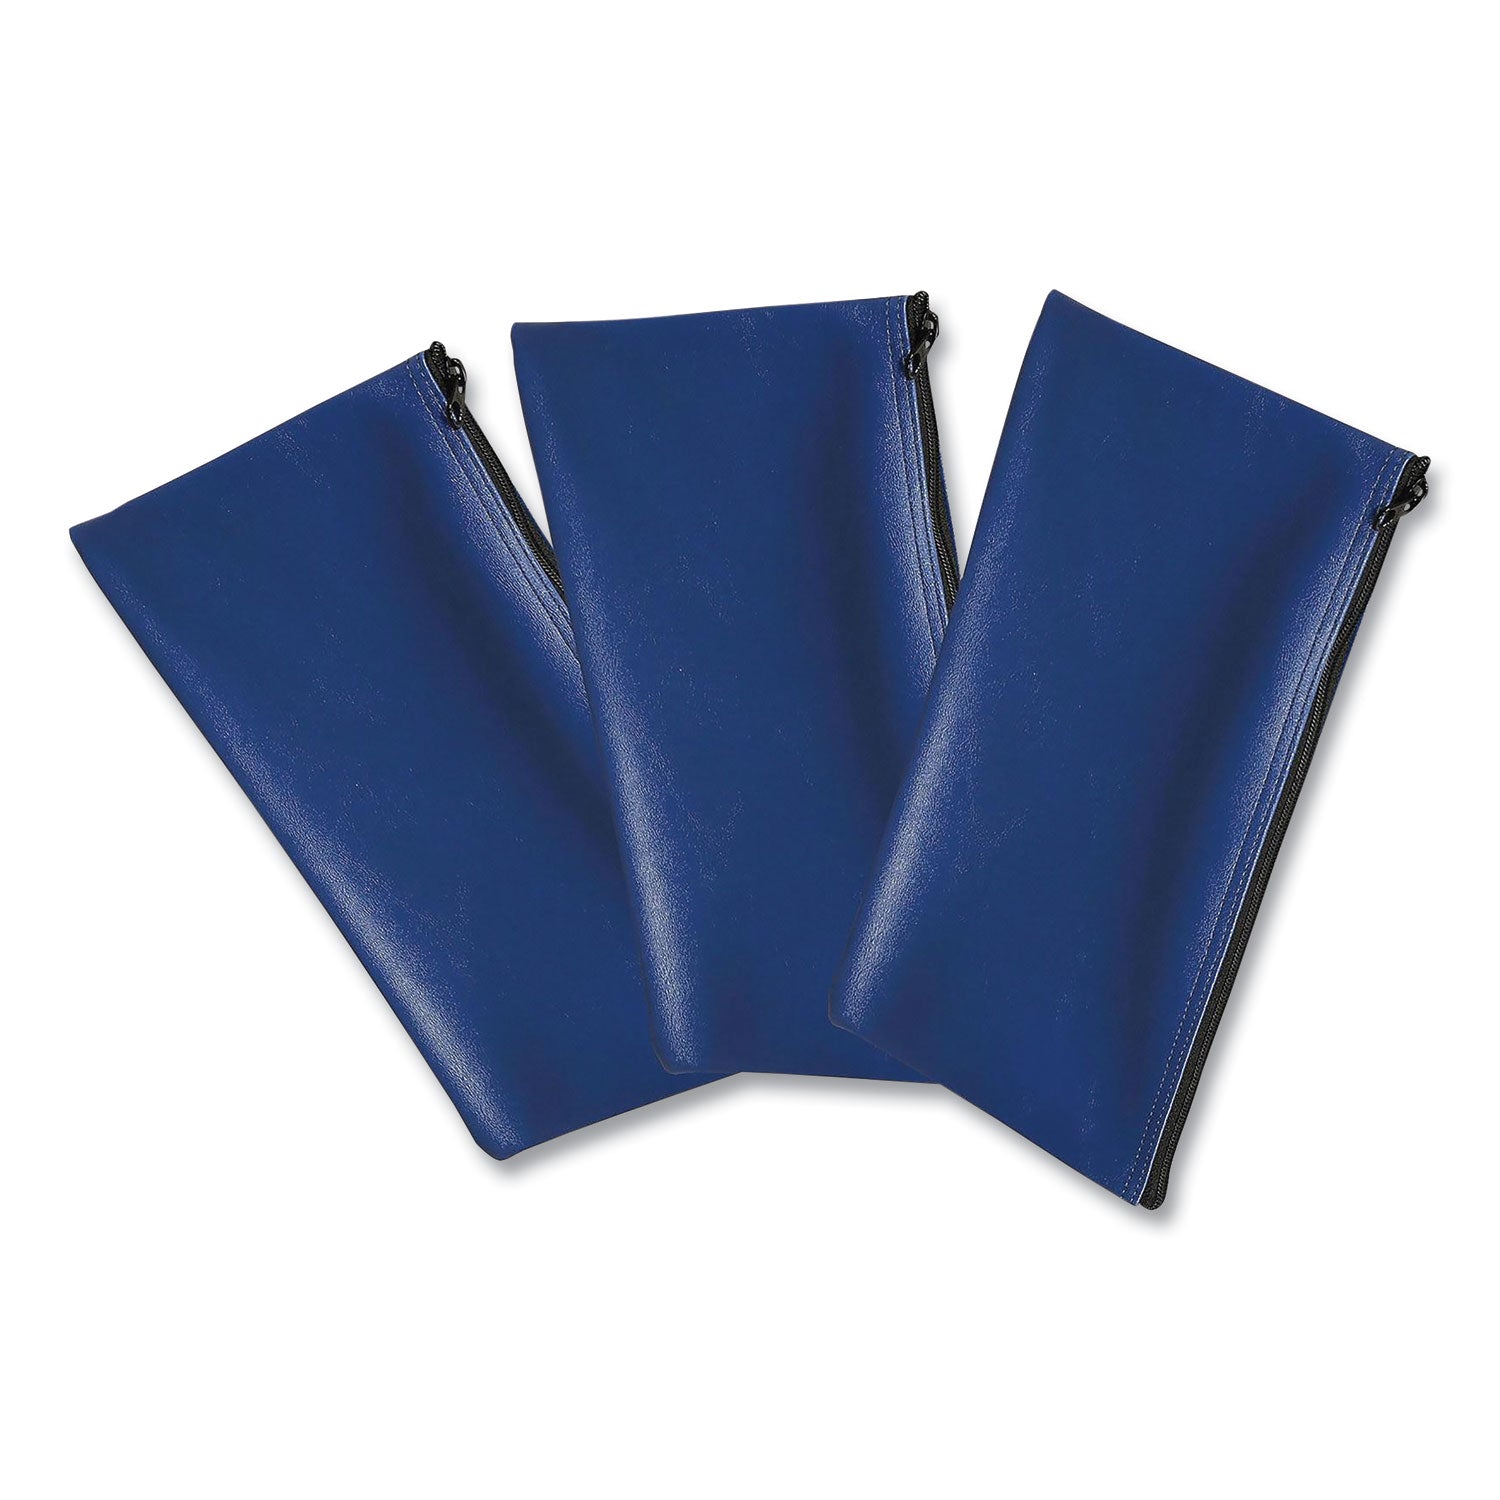 multipurpose-zipper-deposit-bags-polyester-113-x-63-blue-3-pack_hwl6503 - 1